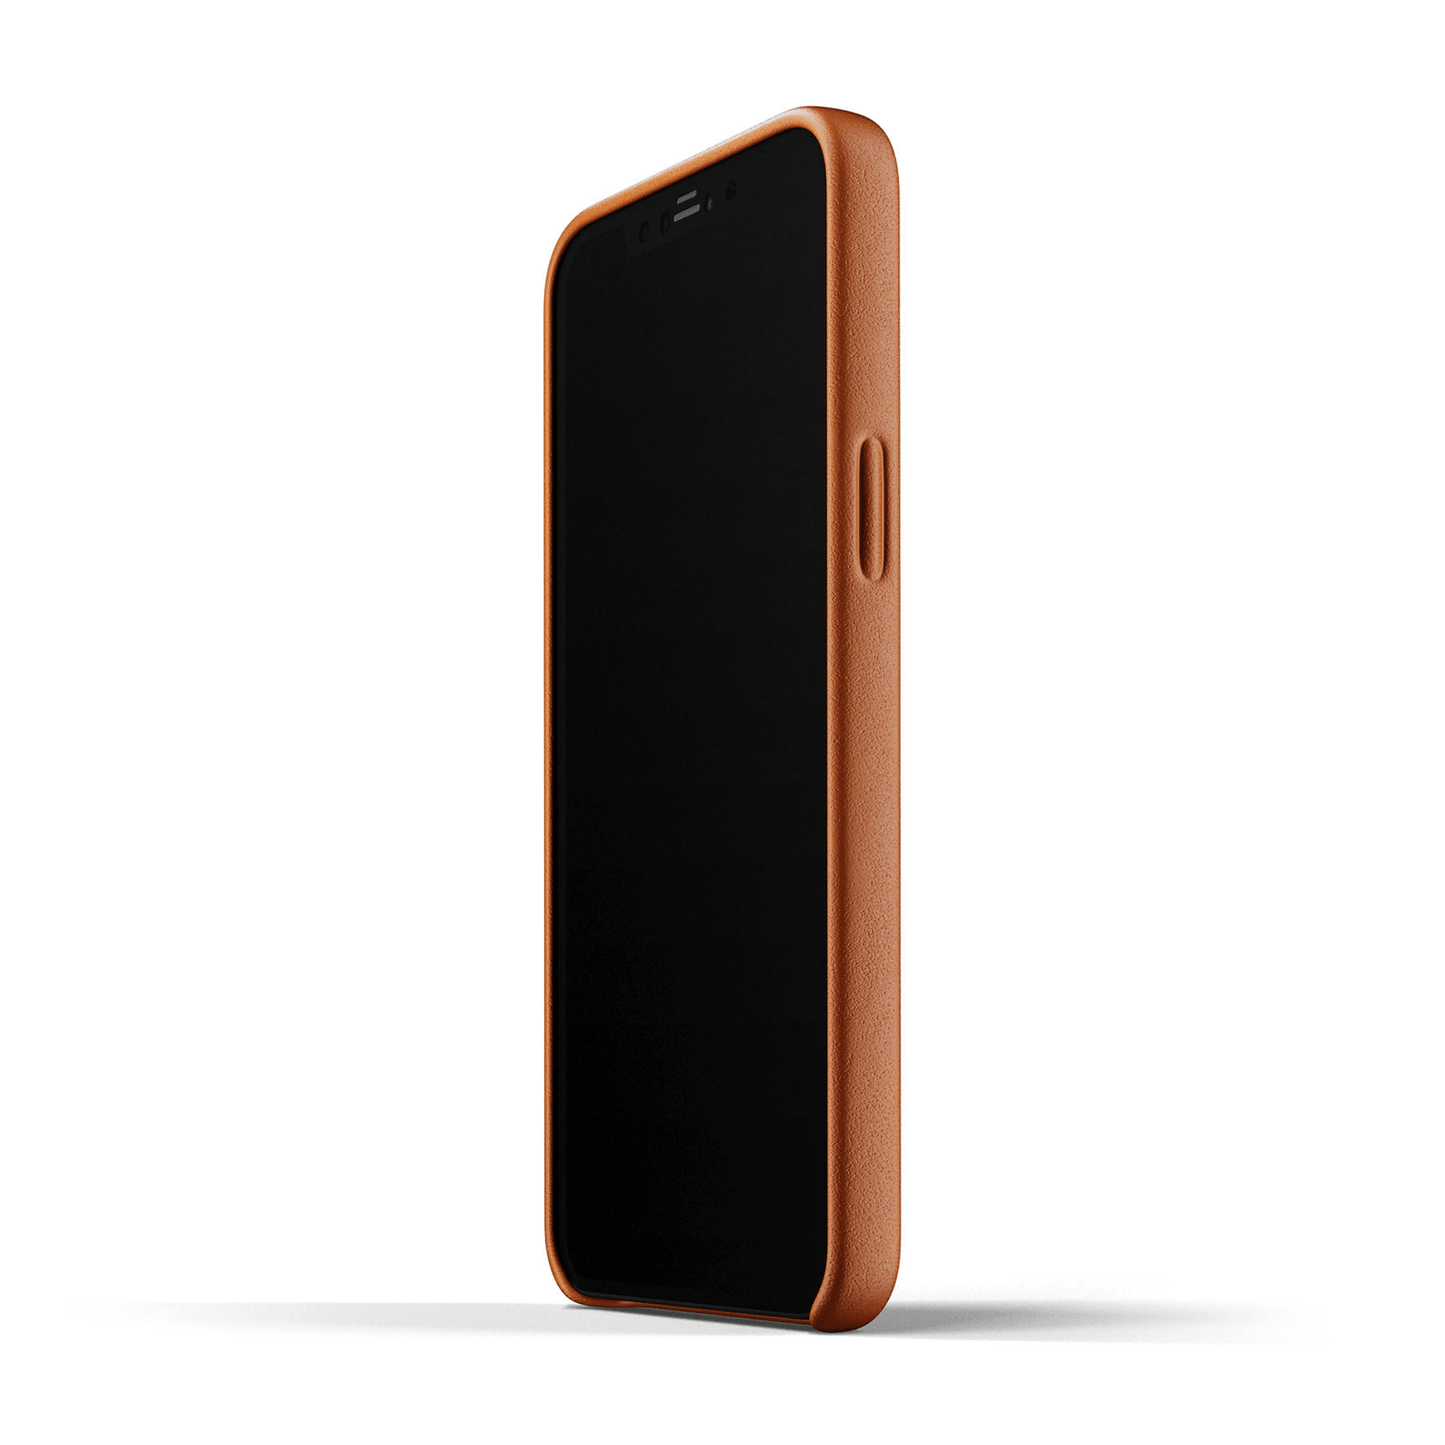 Mujjo - iPhone 12 / iPhone 12 Pro Full Leather Case - Braun - Pazzar.ch